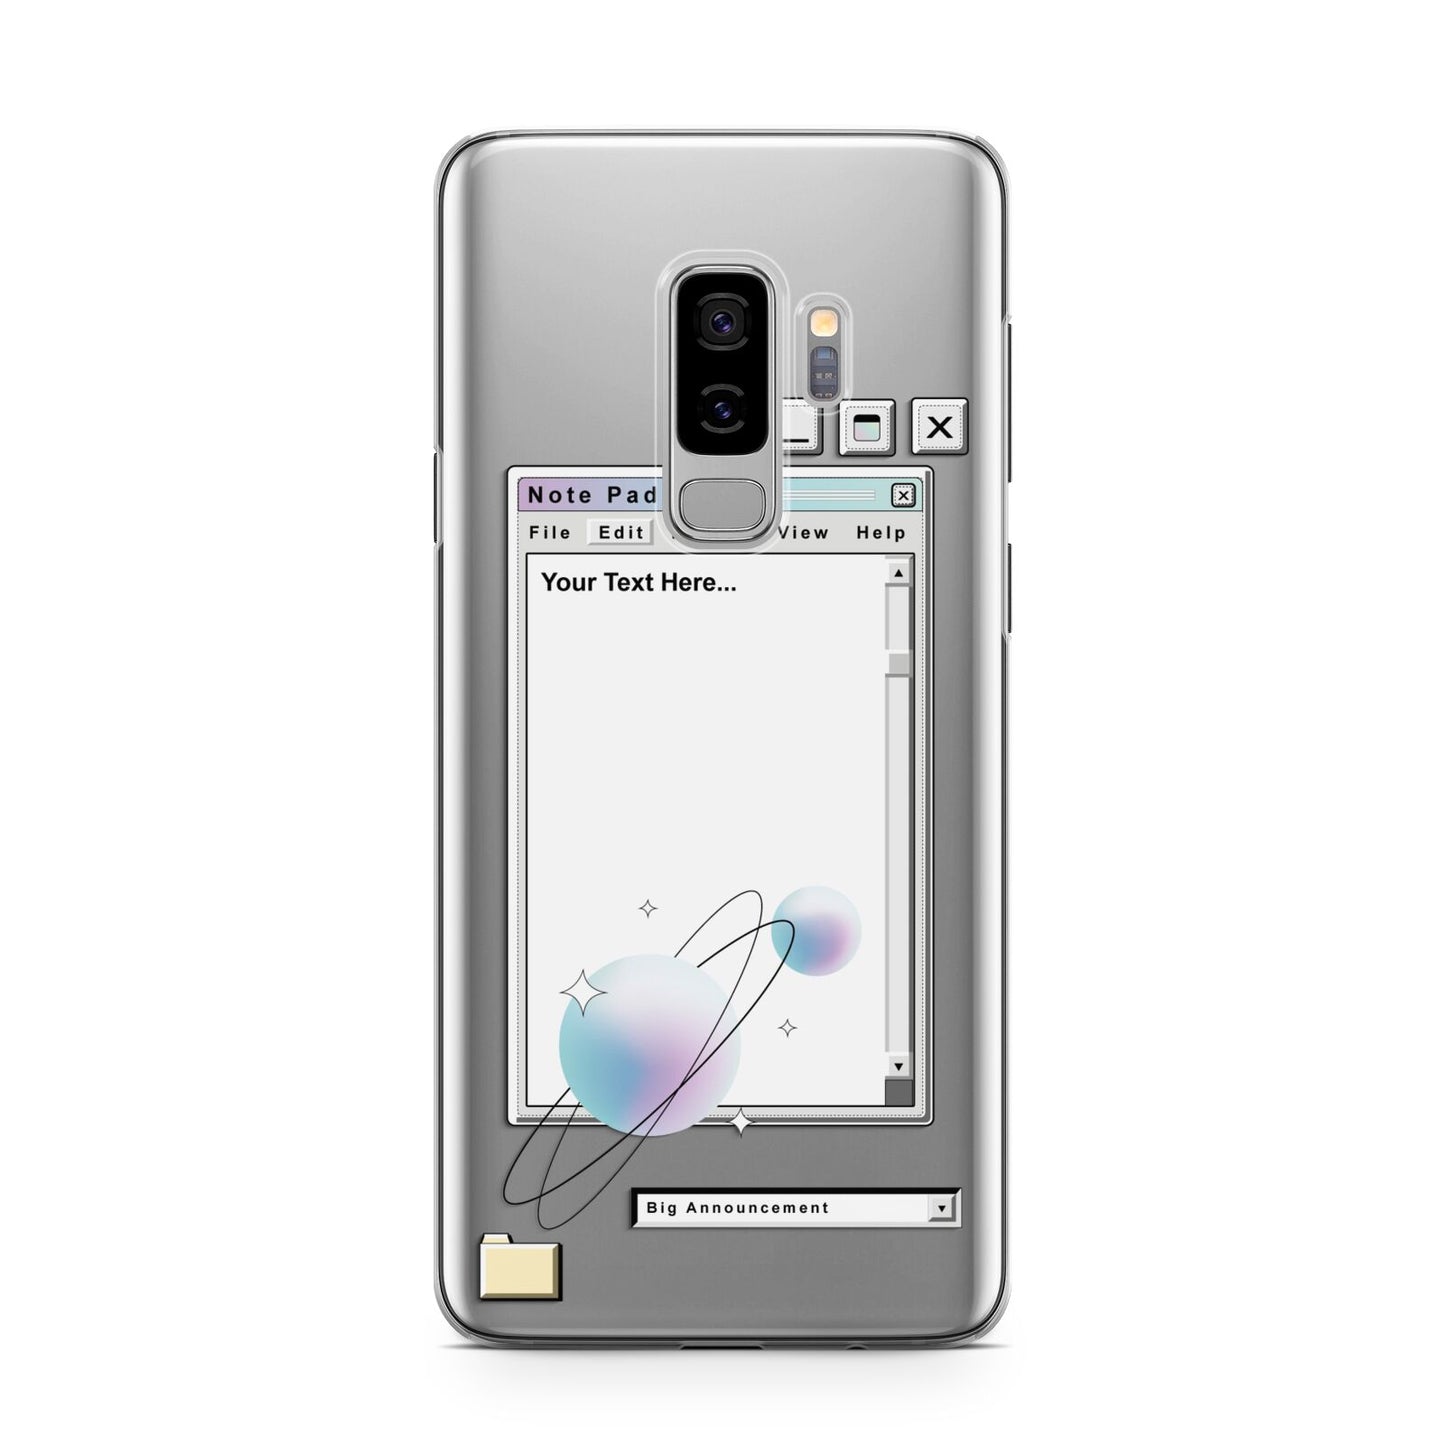 Retro Note Pad Samsung Galaxy S9 Plus Case on Silver phone